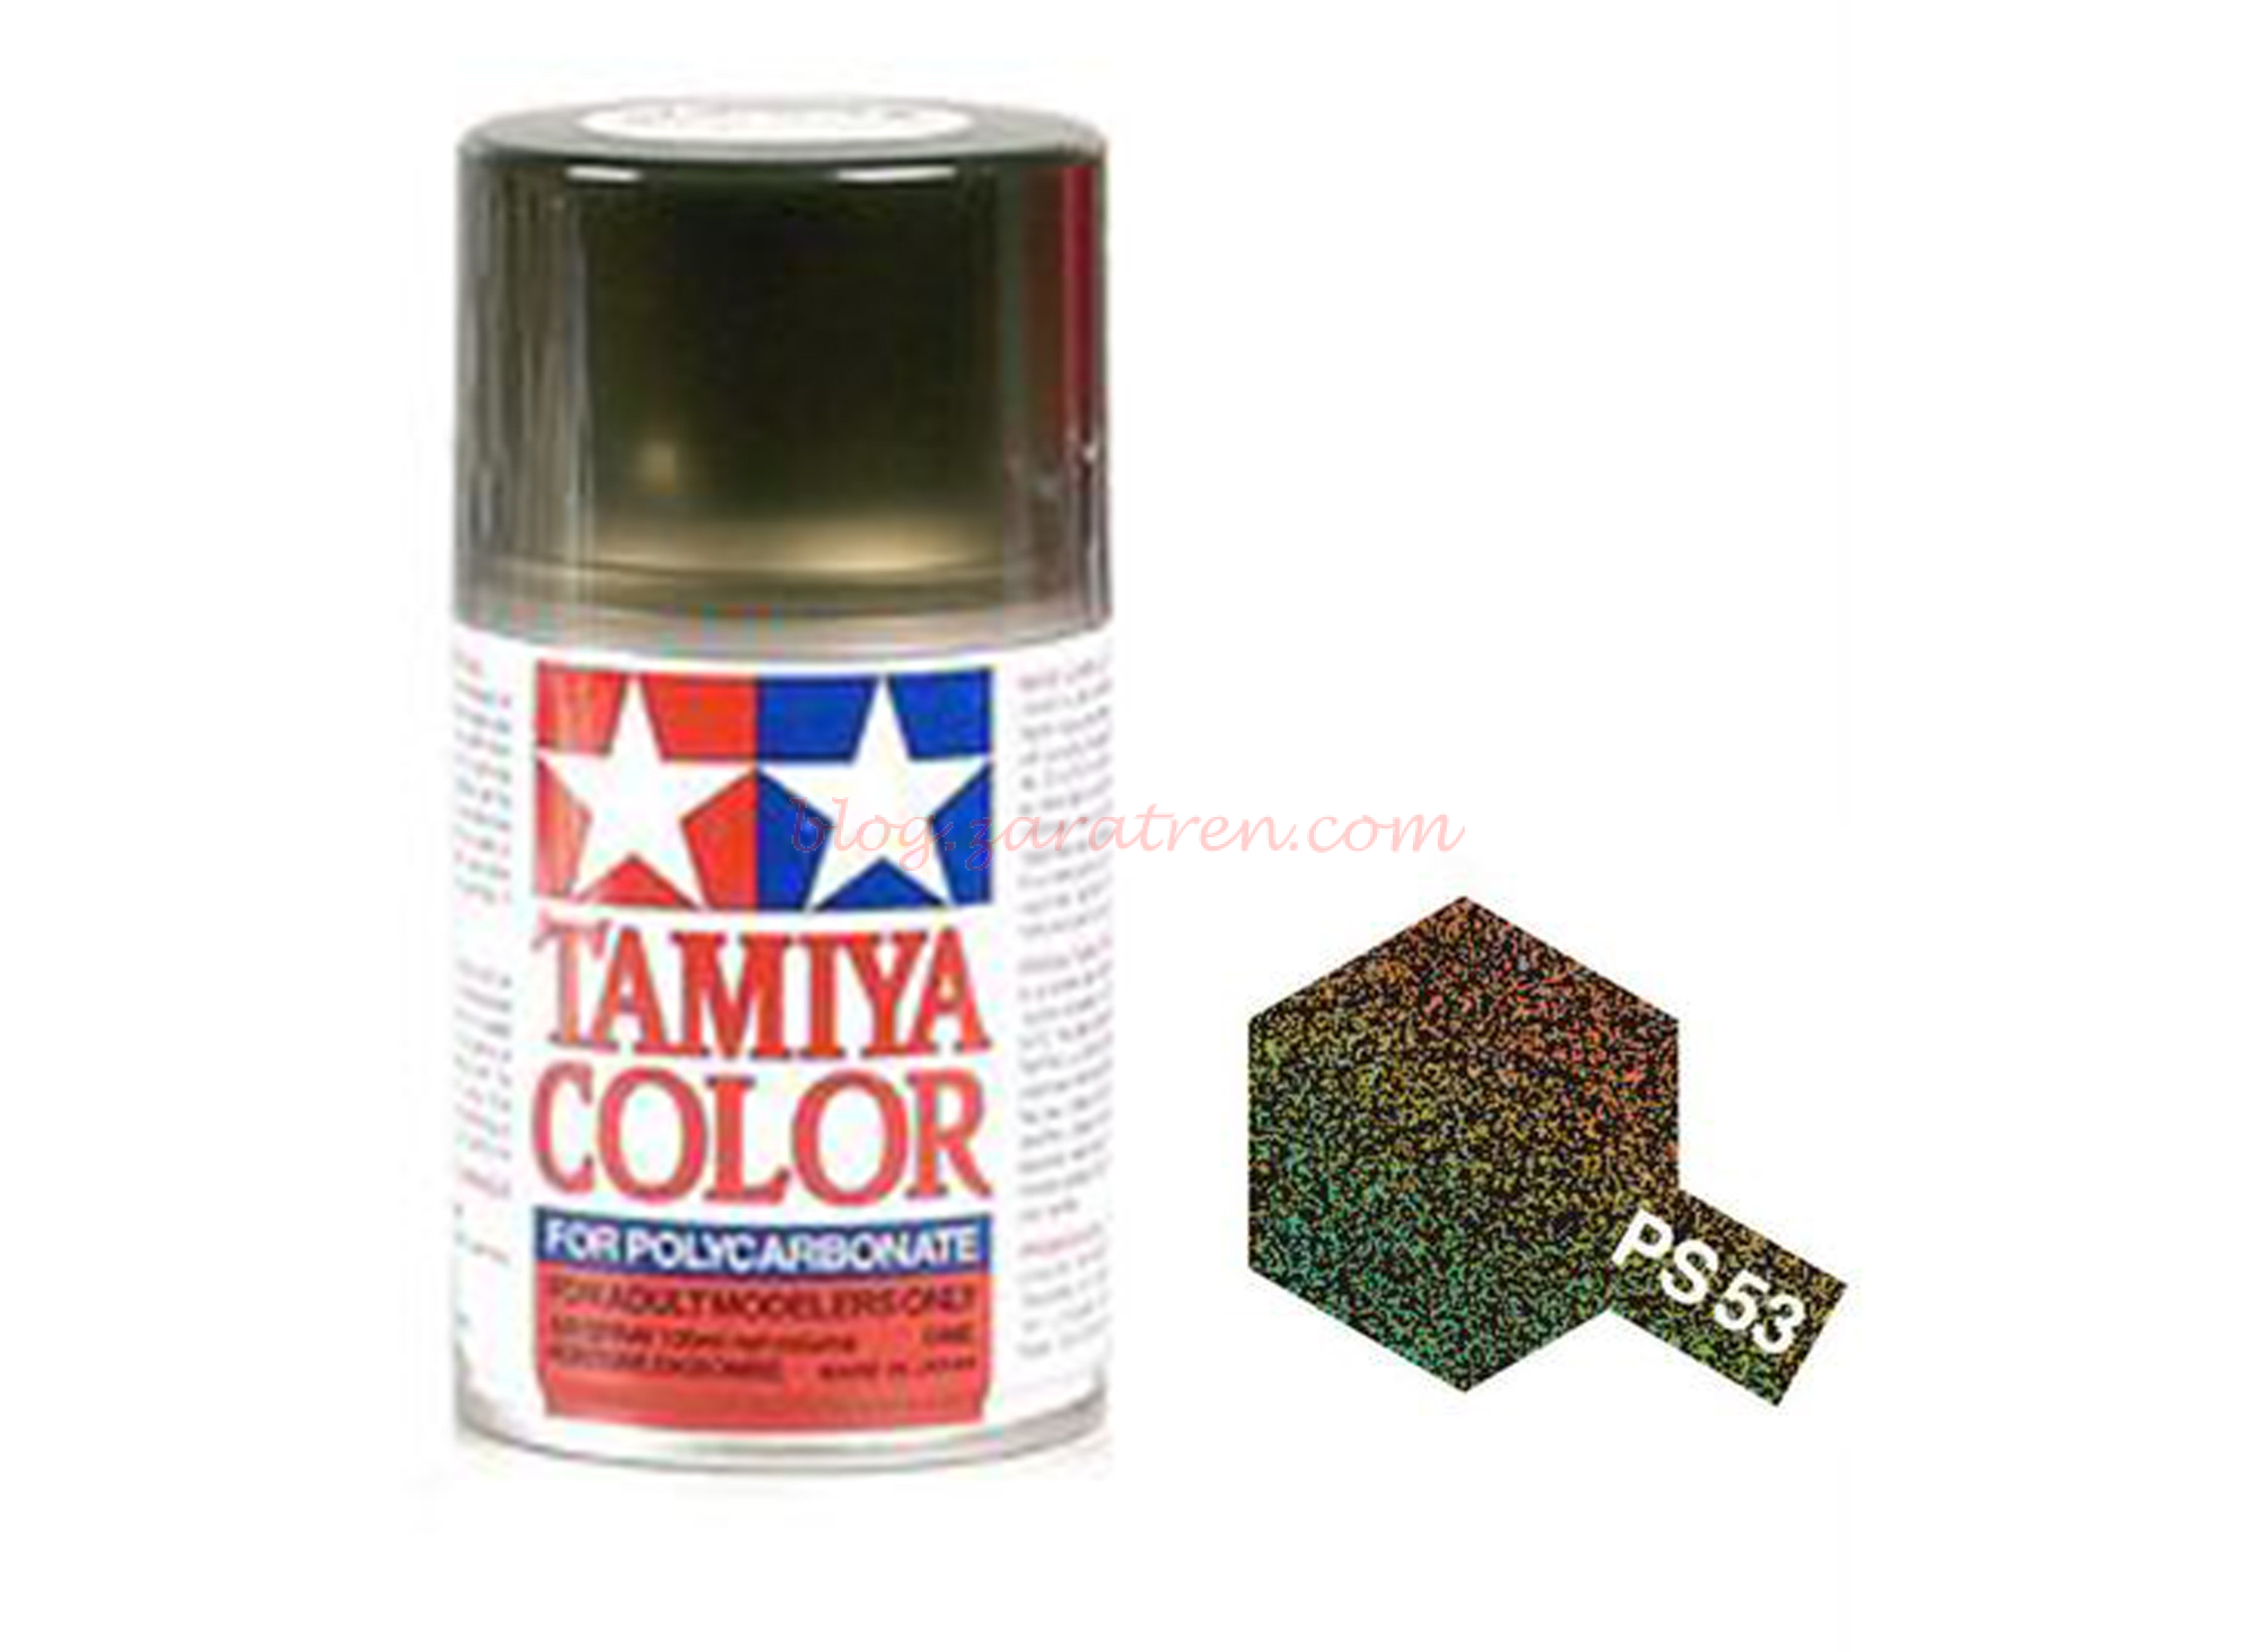 Tamiya – Spray Policarbonato Purpurina, (85053) ,Bote 100 ml, Ref: PS-53.